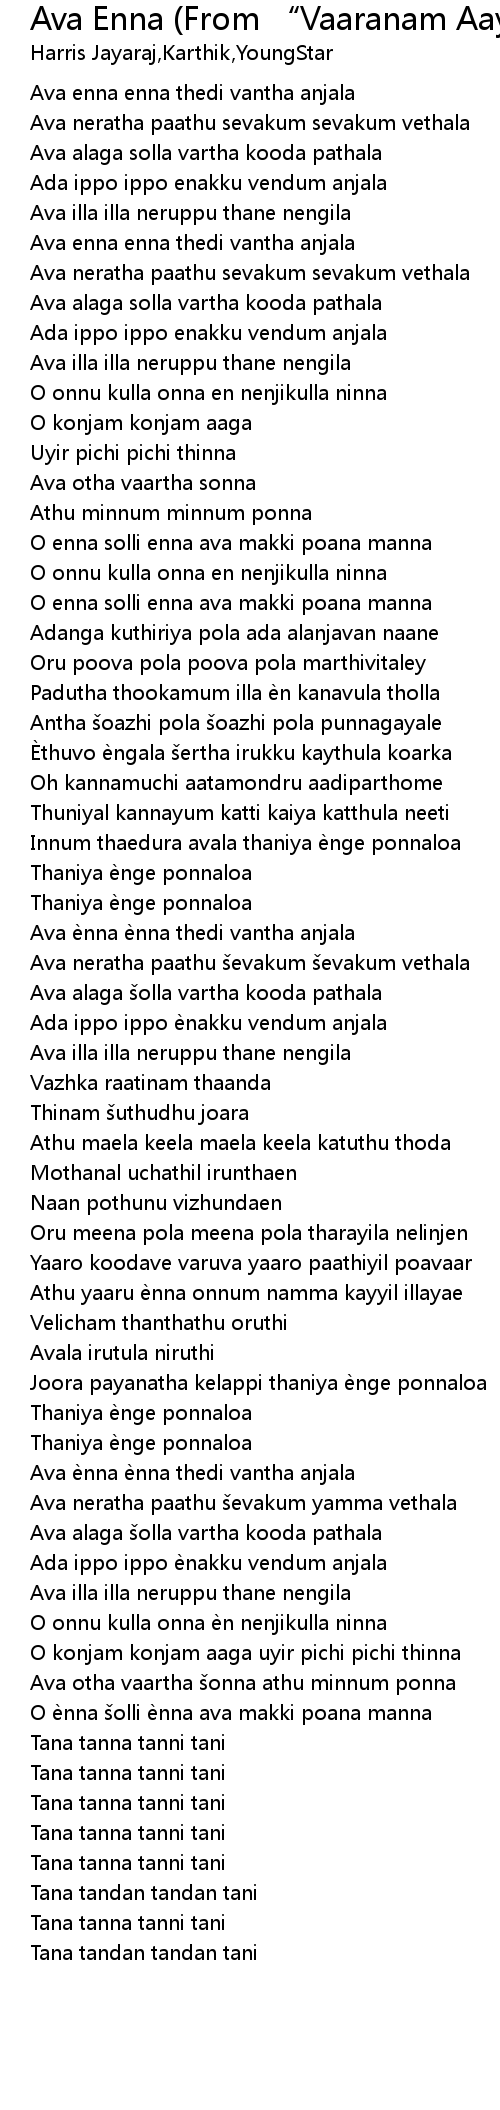 Ava enna enna thedi vantha anjala song lyrics